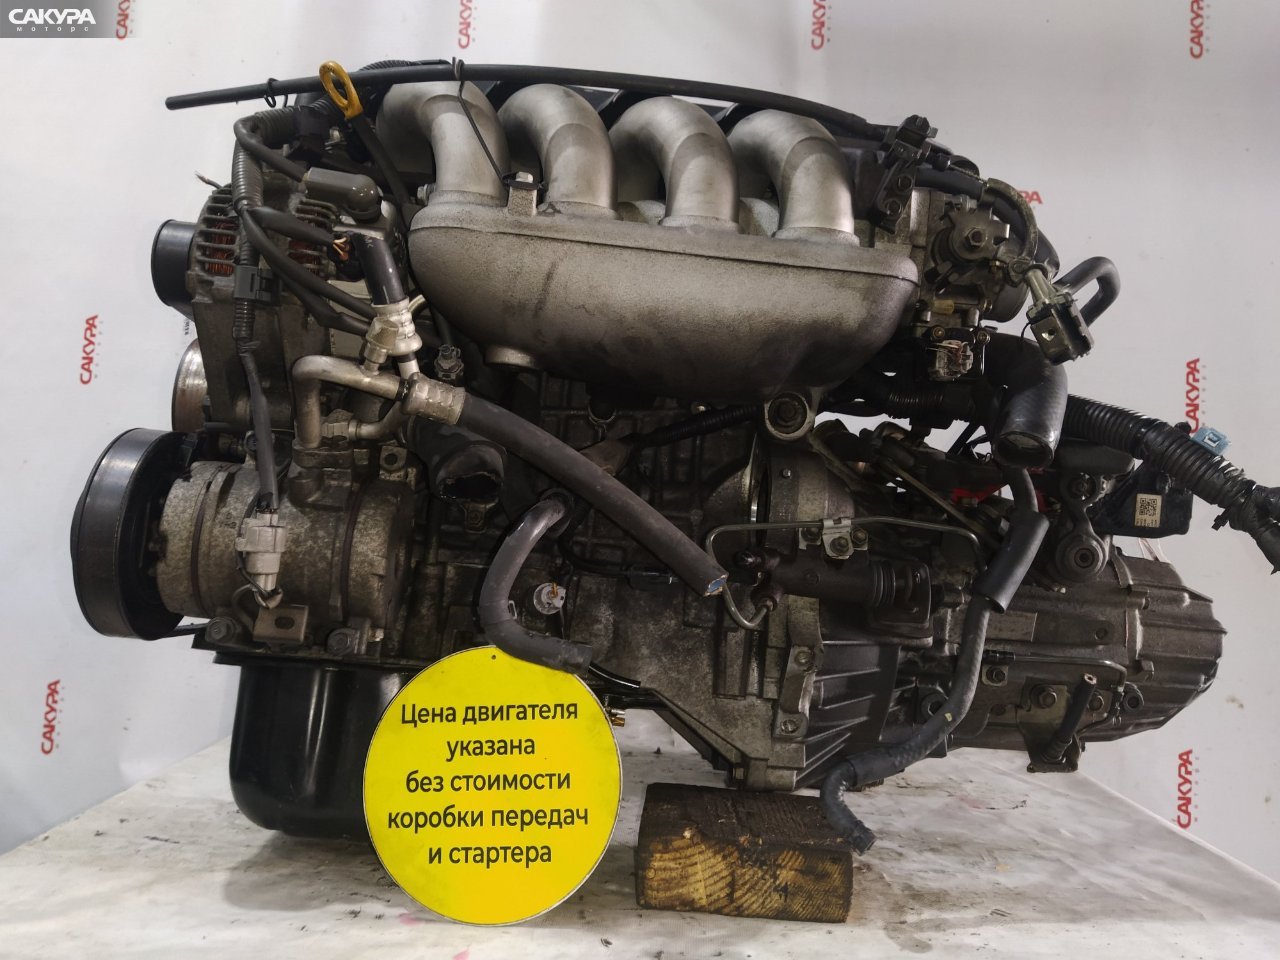 Двигатель Toyota Celica ZZT231 2ZZ-GE: купить в Сакура Красноярск.